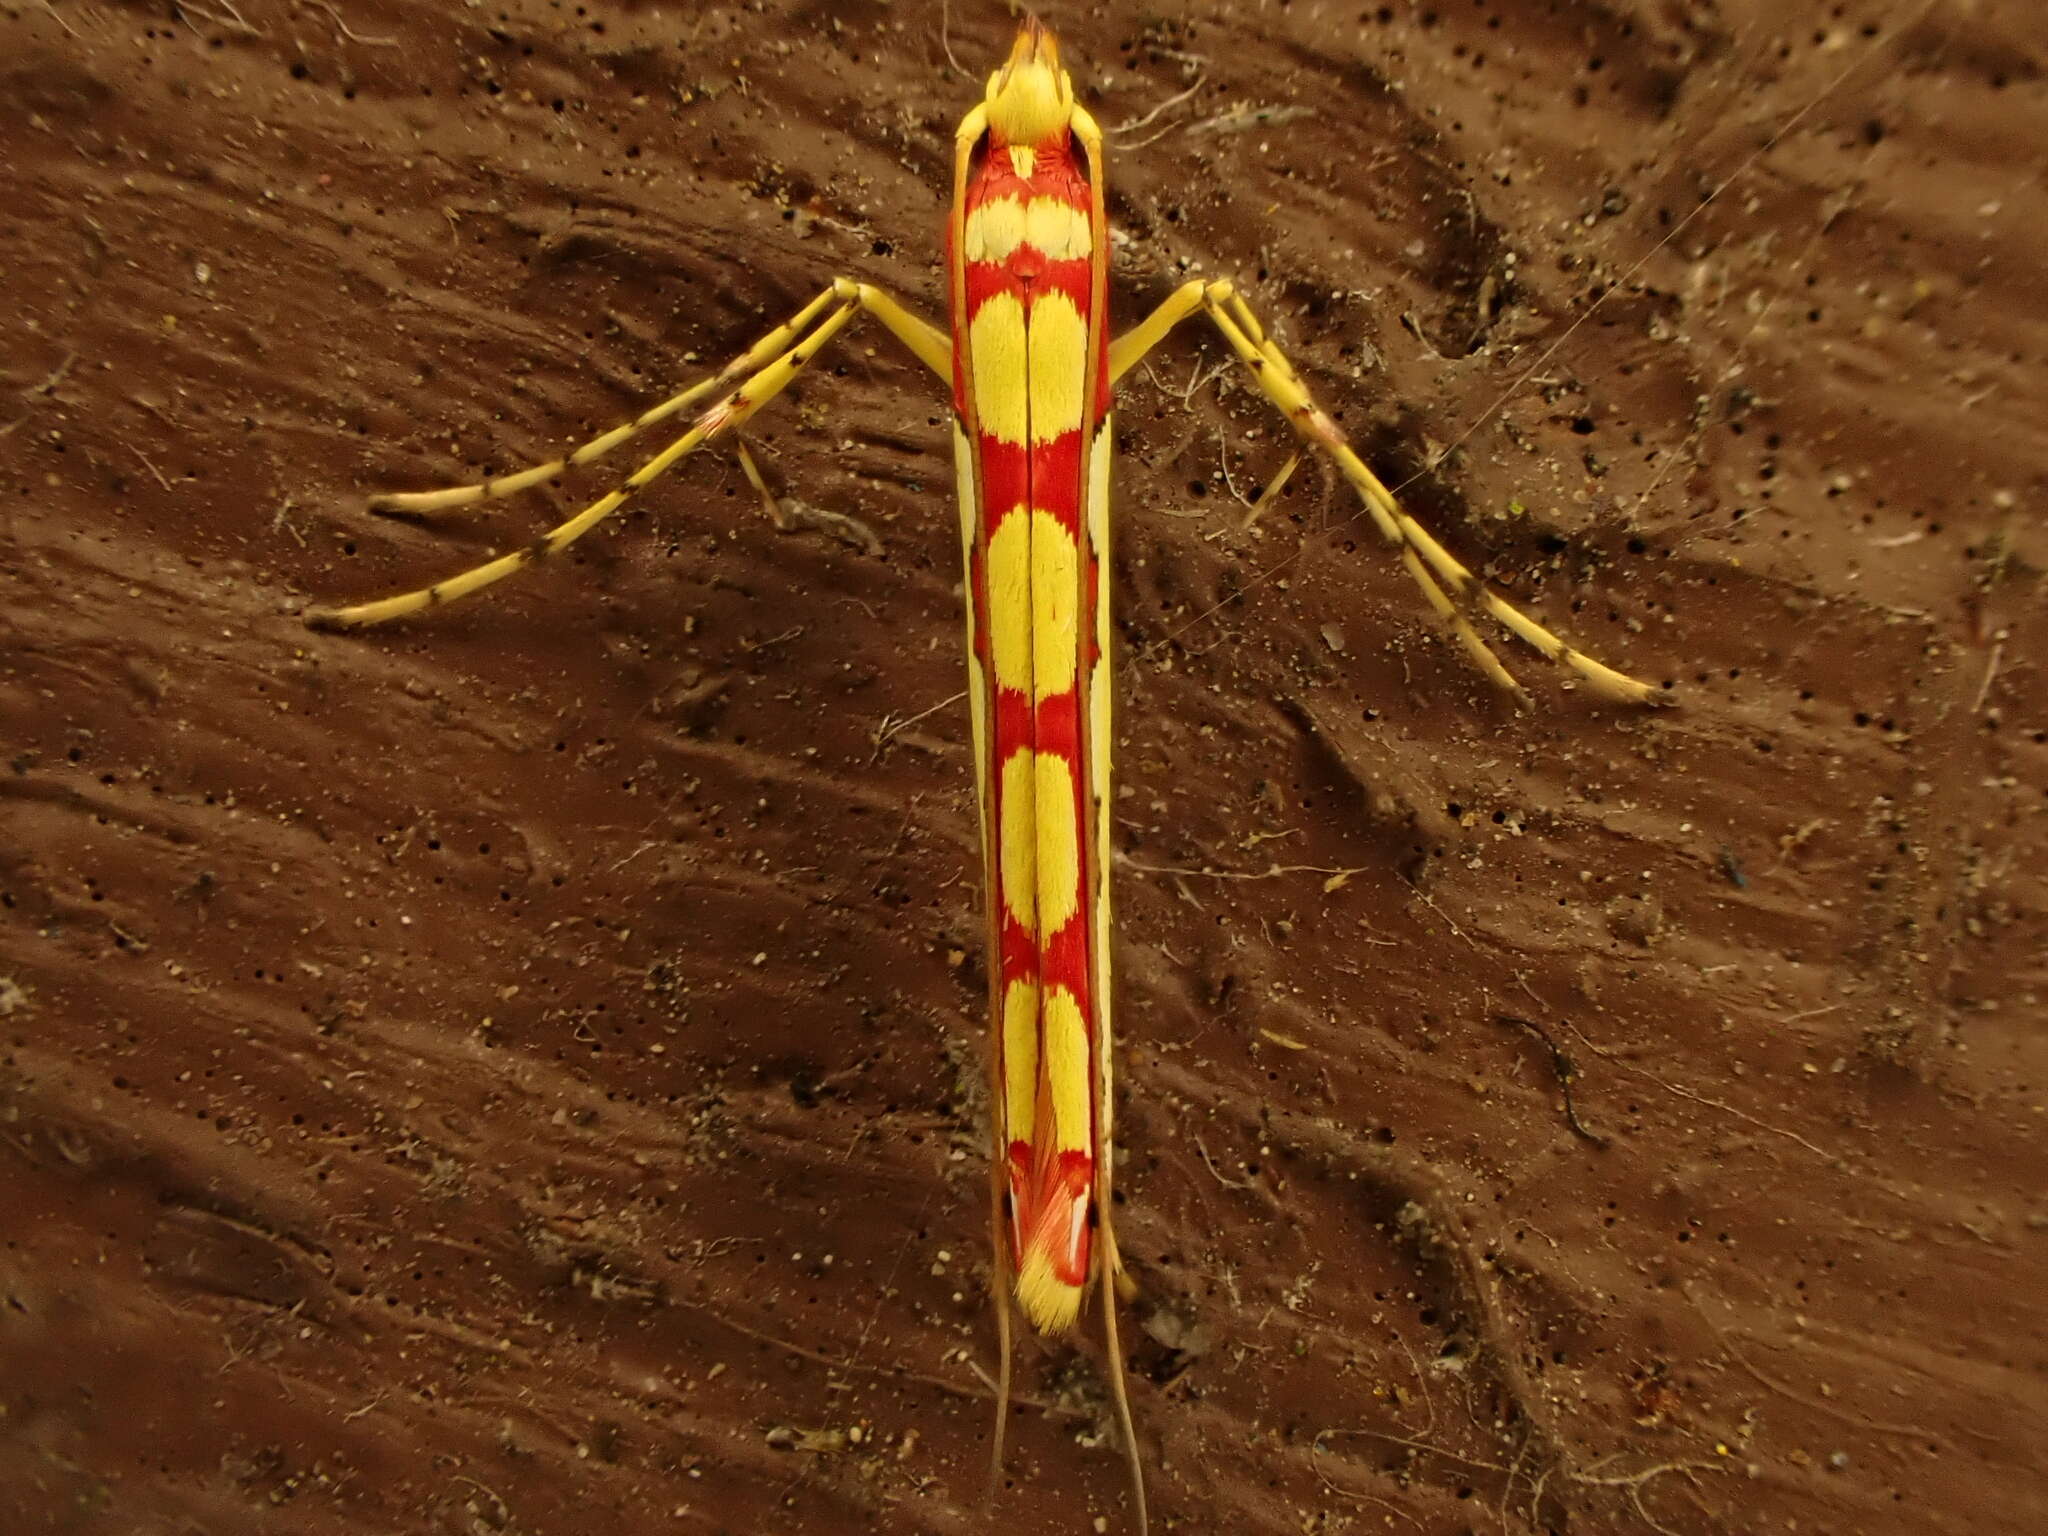 Image of Macarostola miniella (Felder & Rogenhofer 1875)